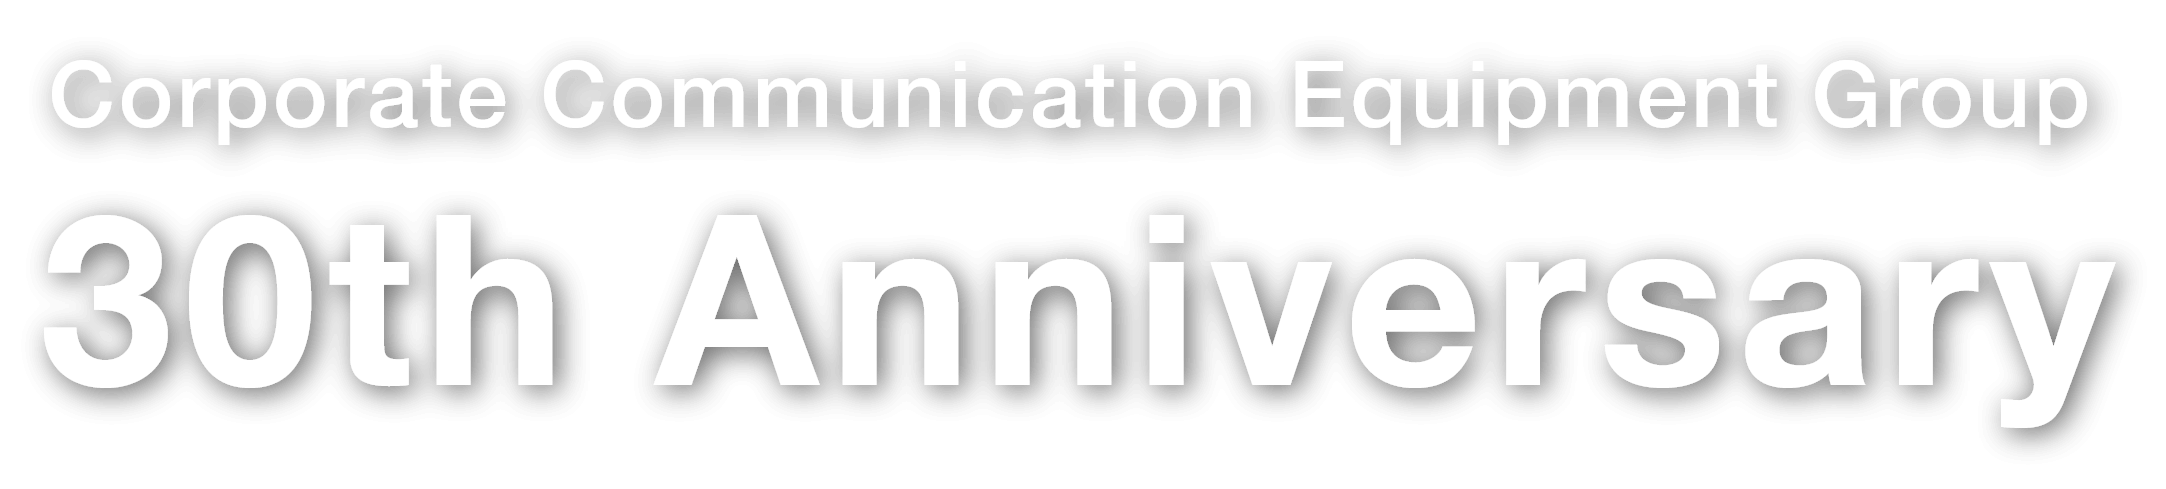 Corporate Communication Equipment Group 30th Anniversary